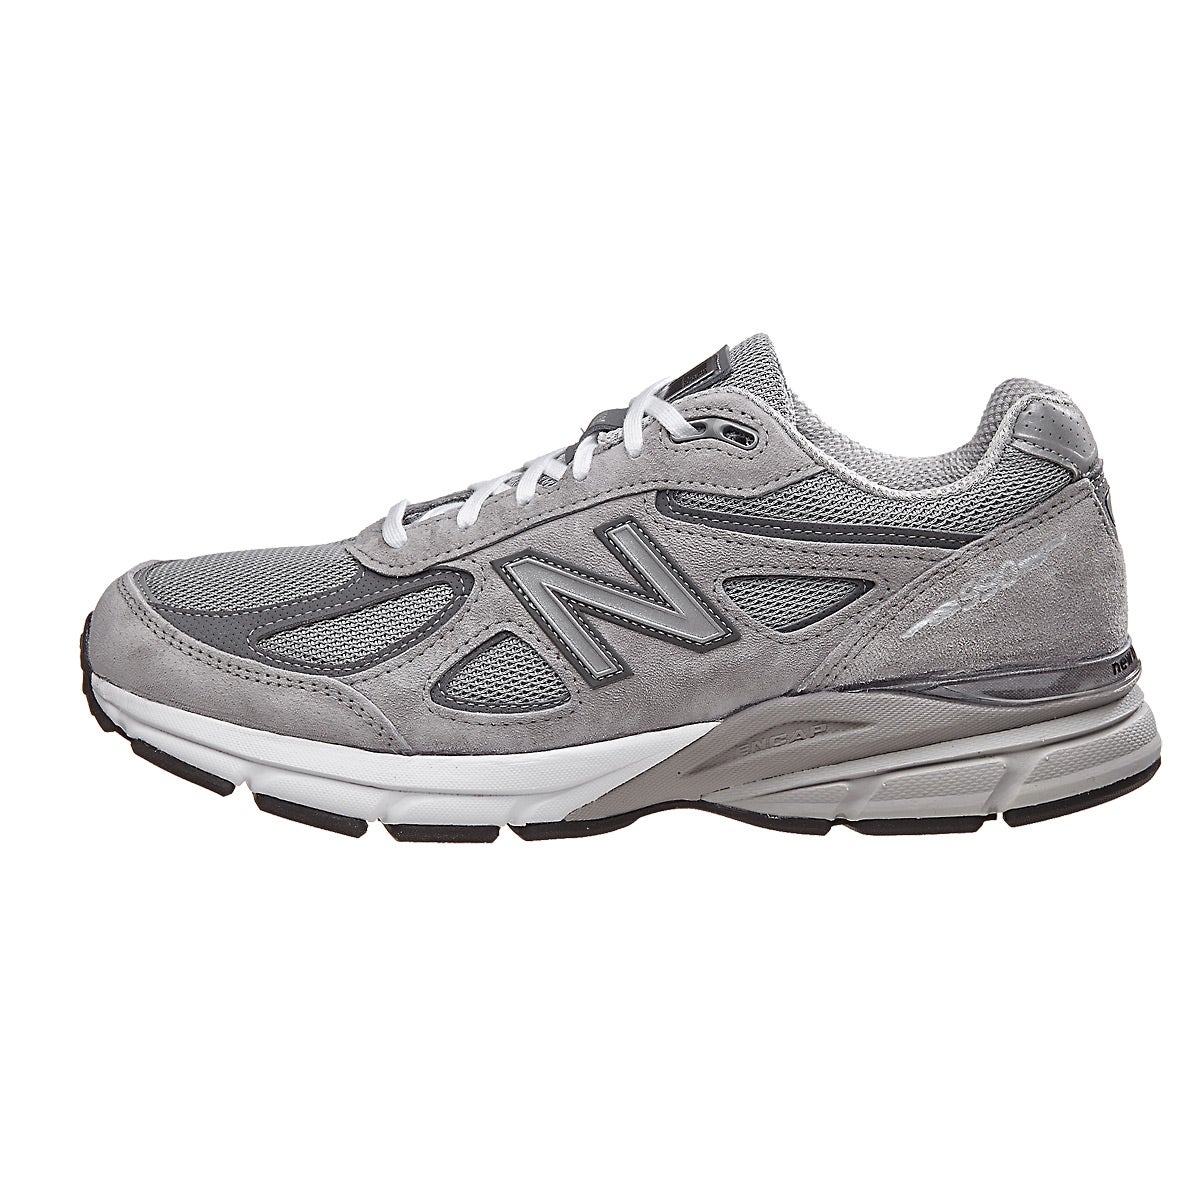 New Balance 990 v4 Men's Shoes Grey/Castlerock 360° View | Running ...